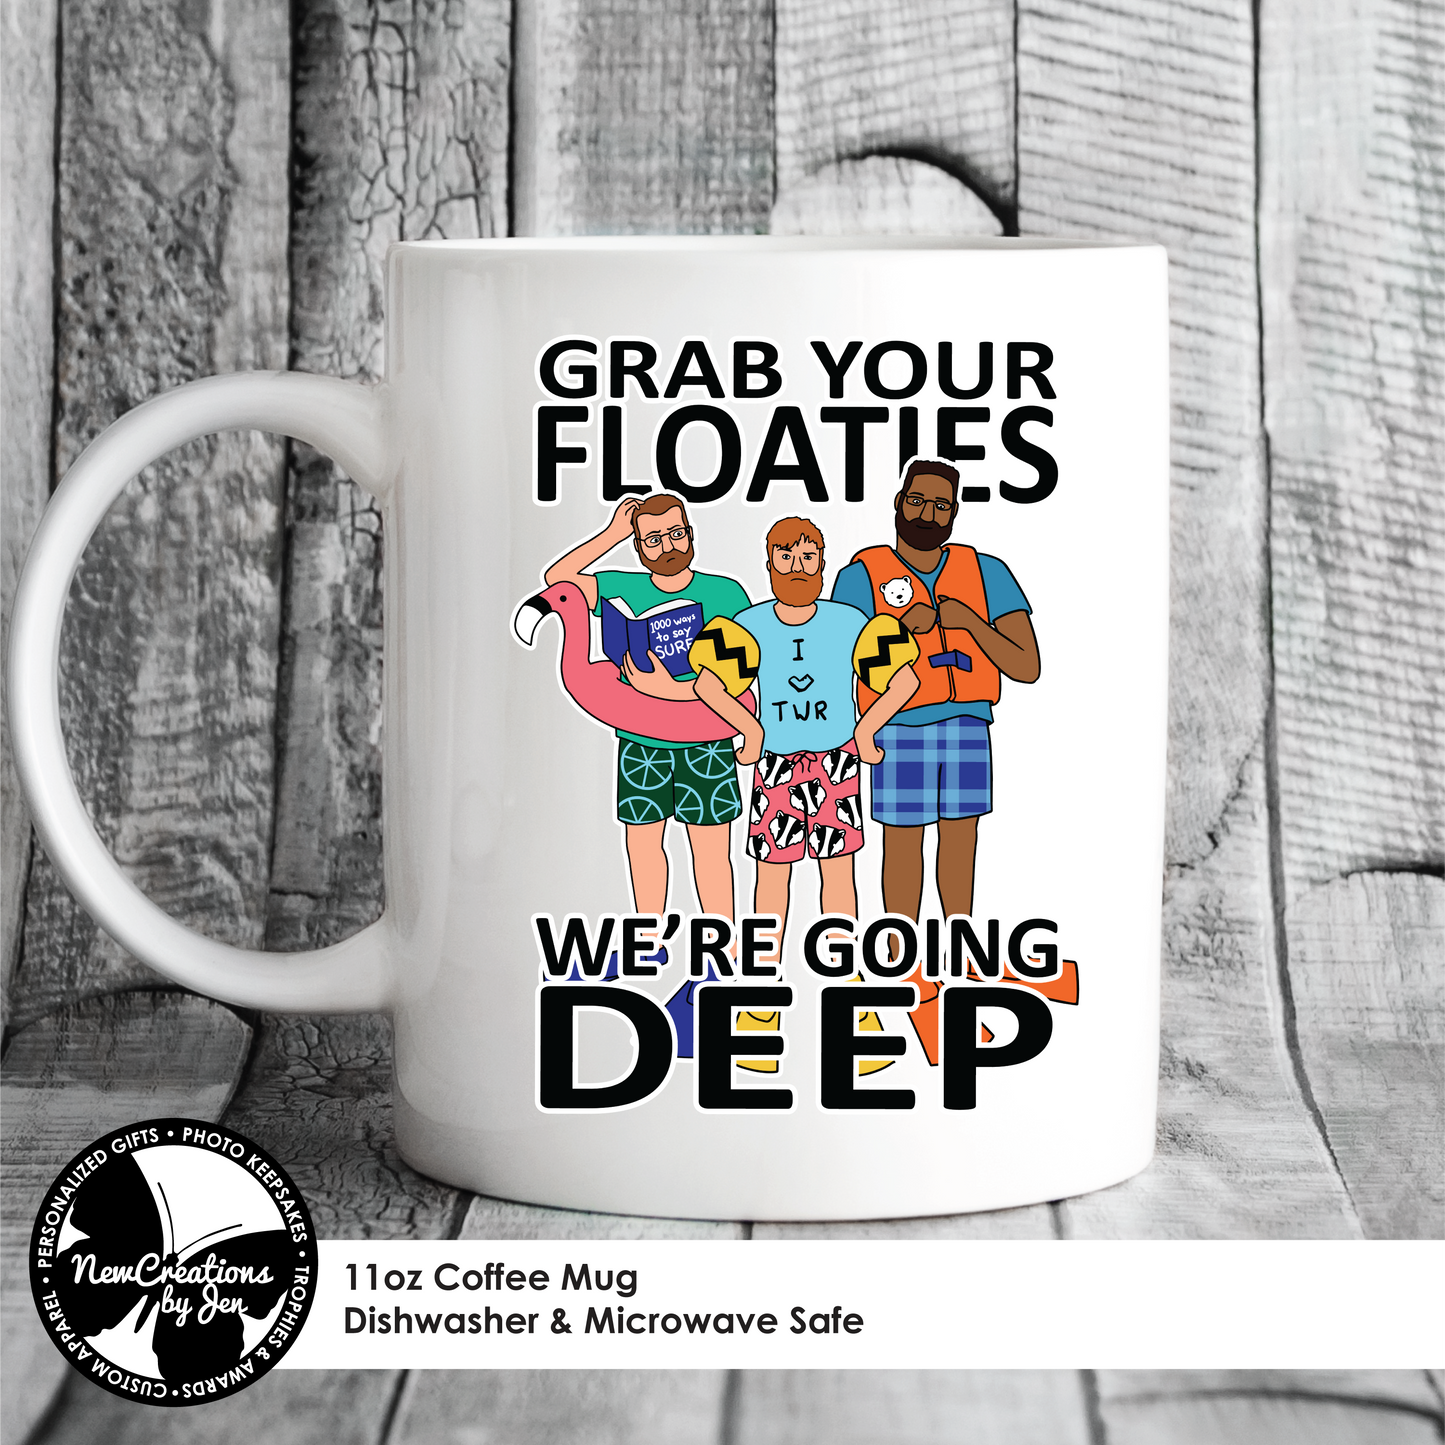 TWR Floaties - 11oz Coffee Mug